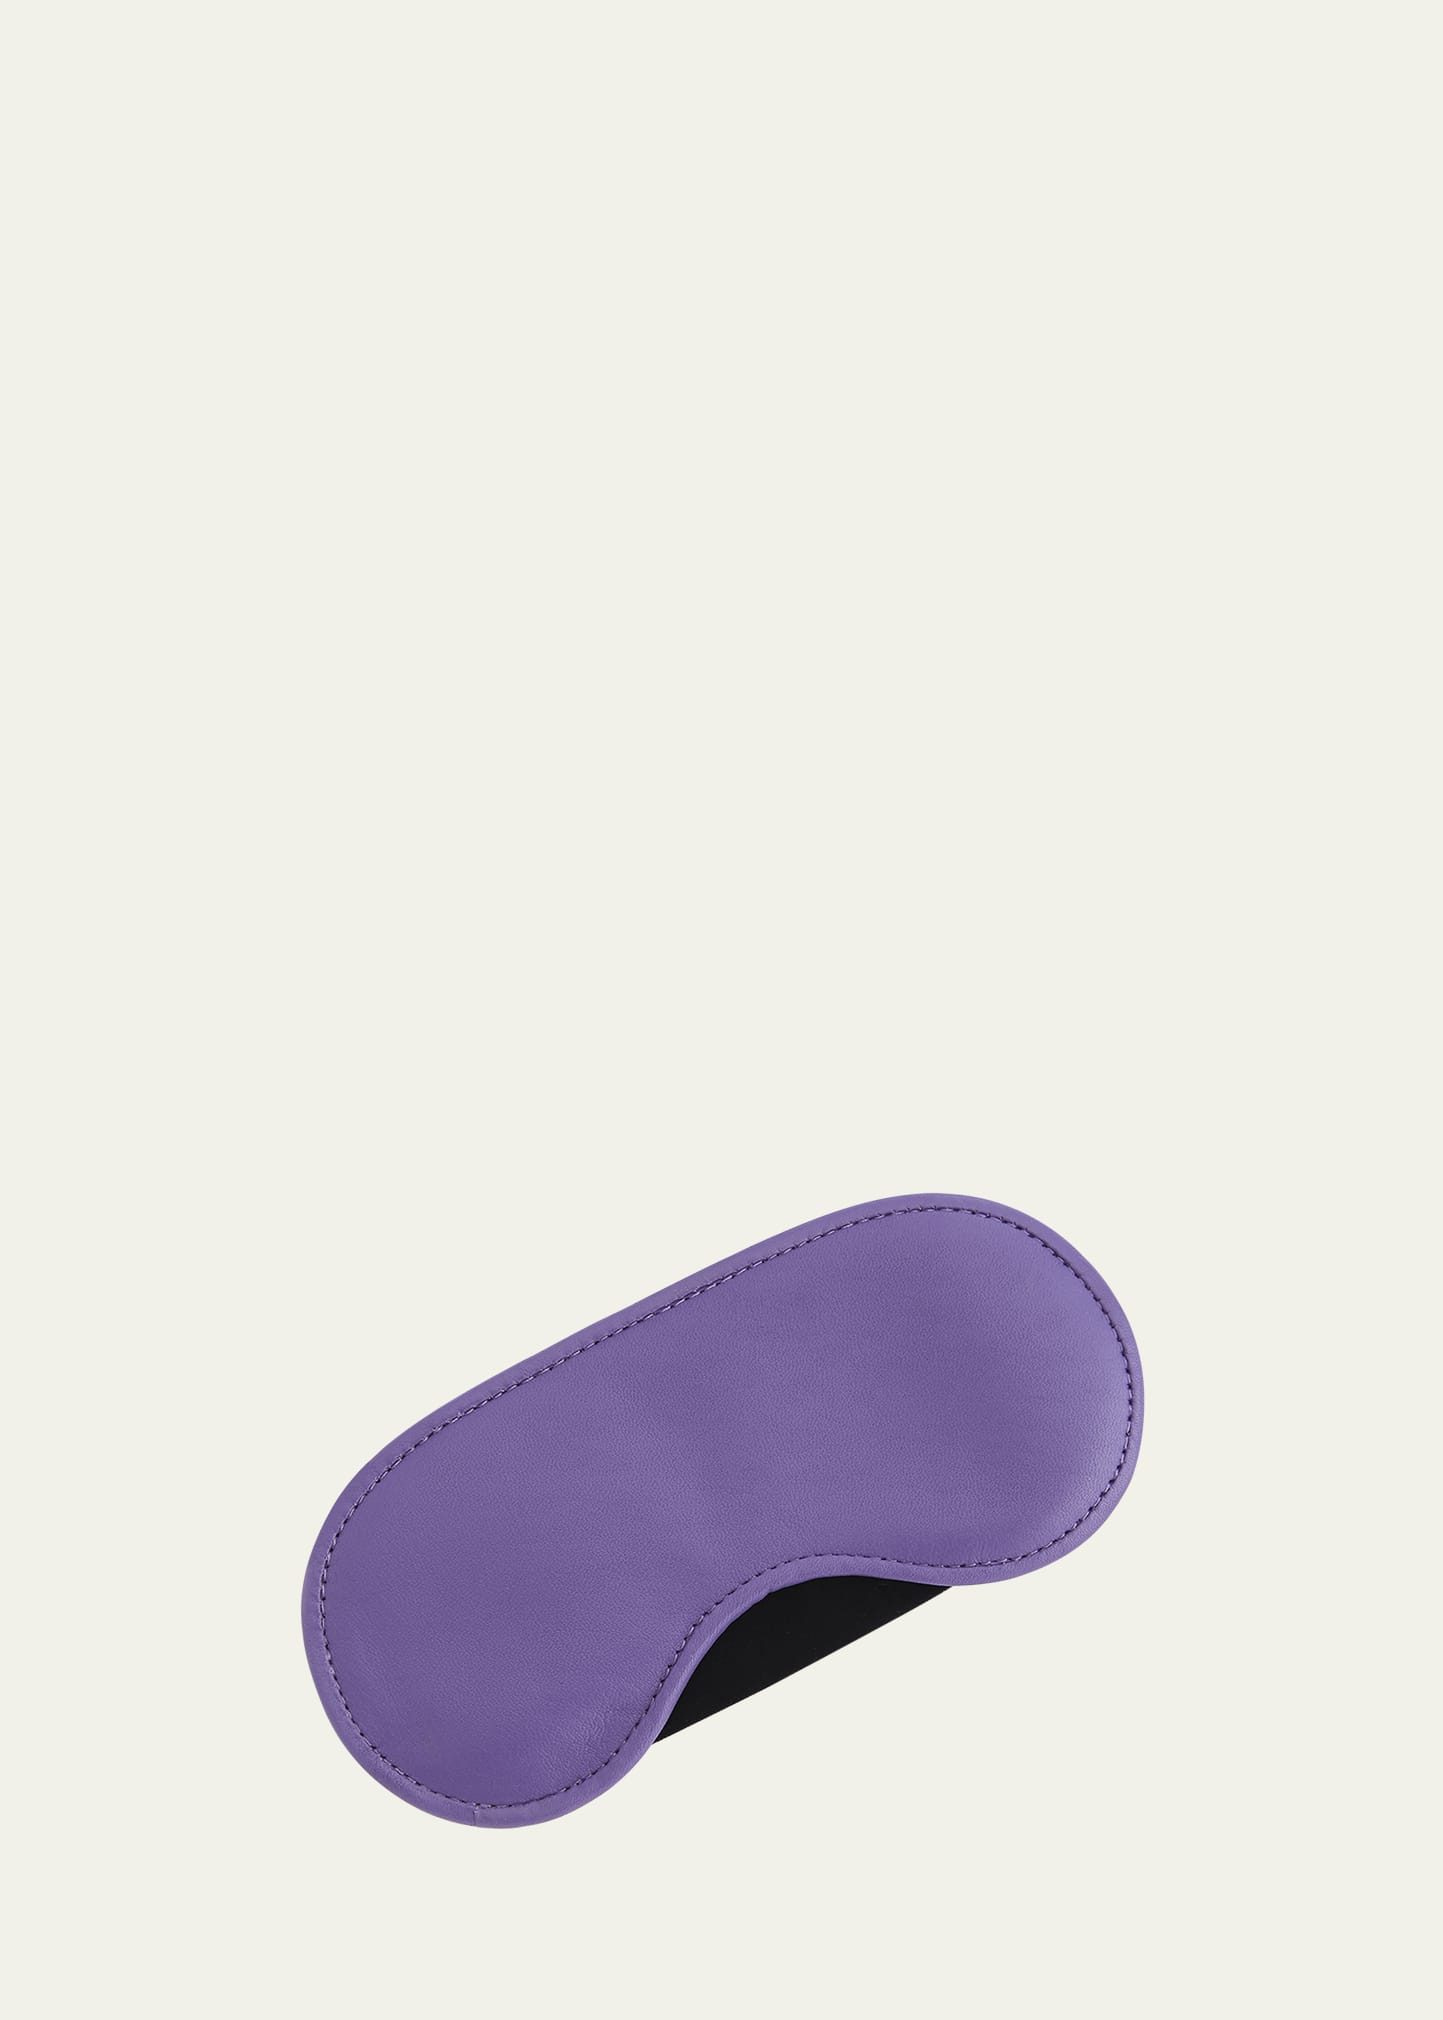 Royce New York Luxe Sleep Mask In Purple